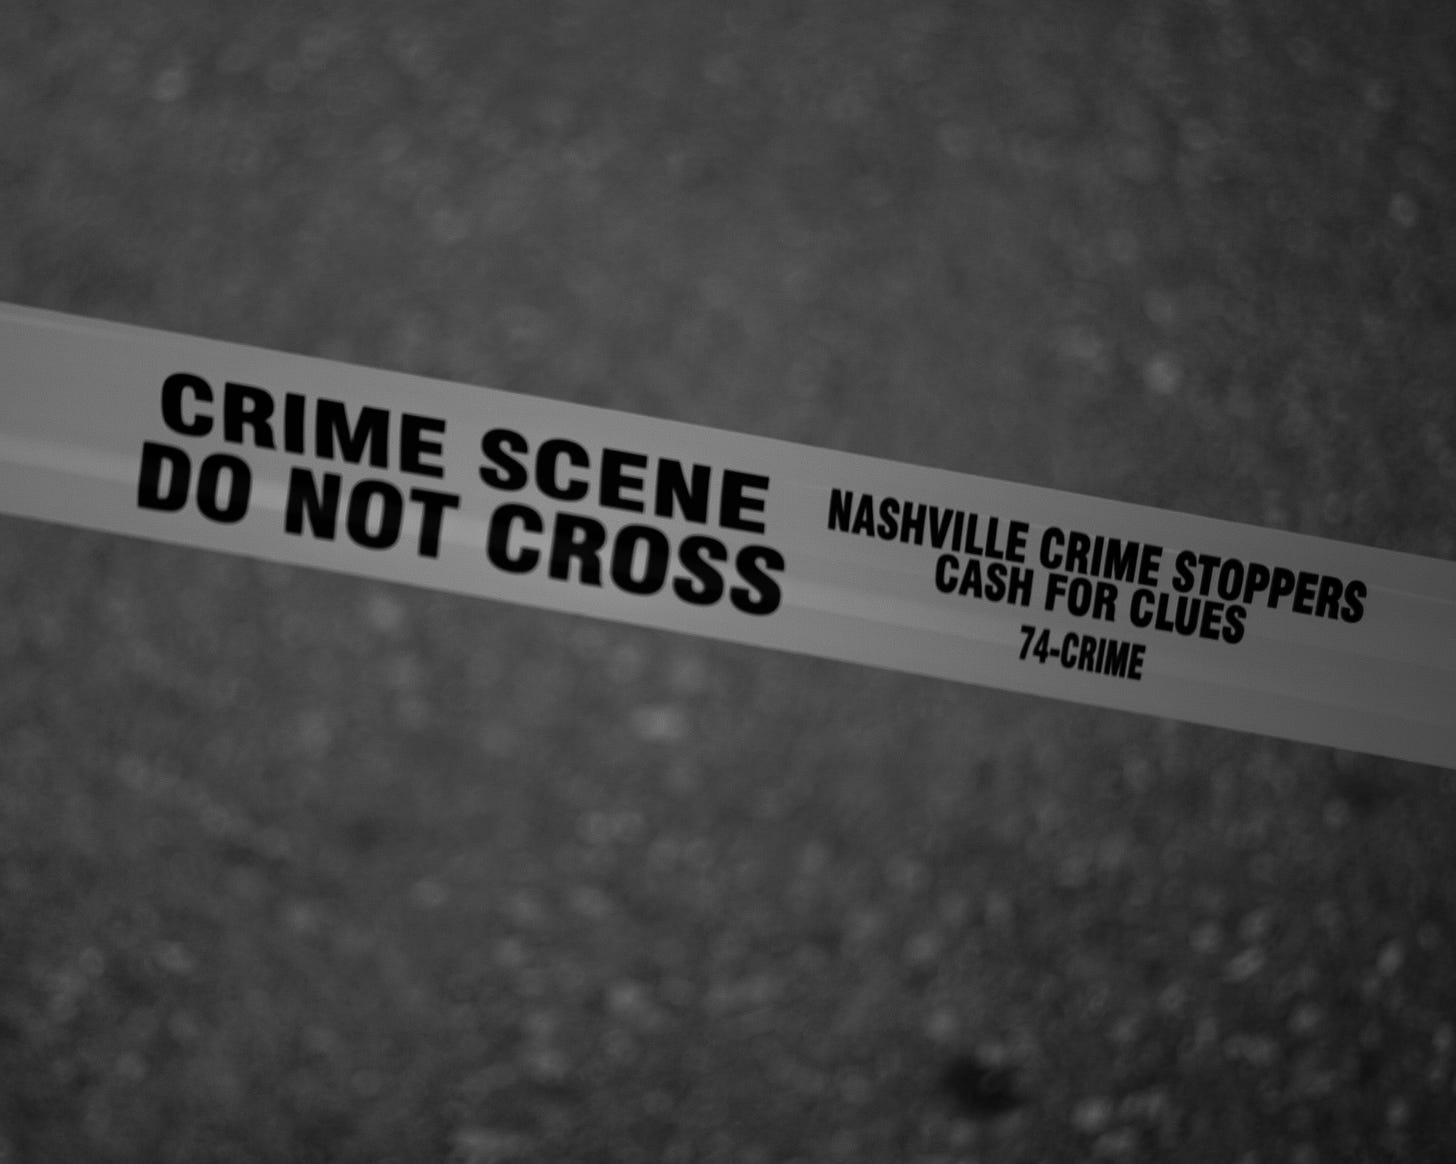 Two Murders in Lowell - by Steve Huff - True Crime Report